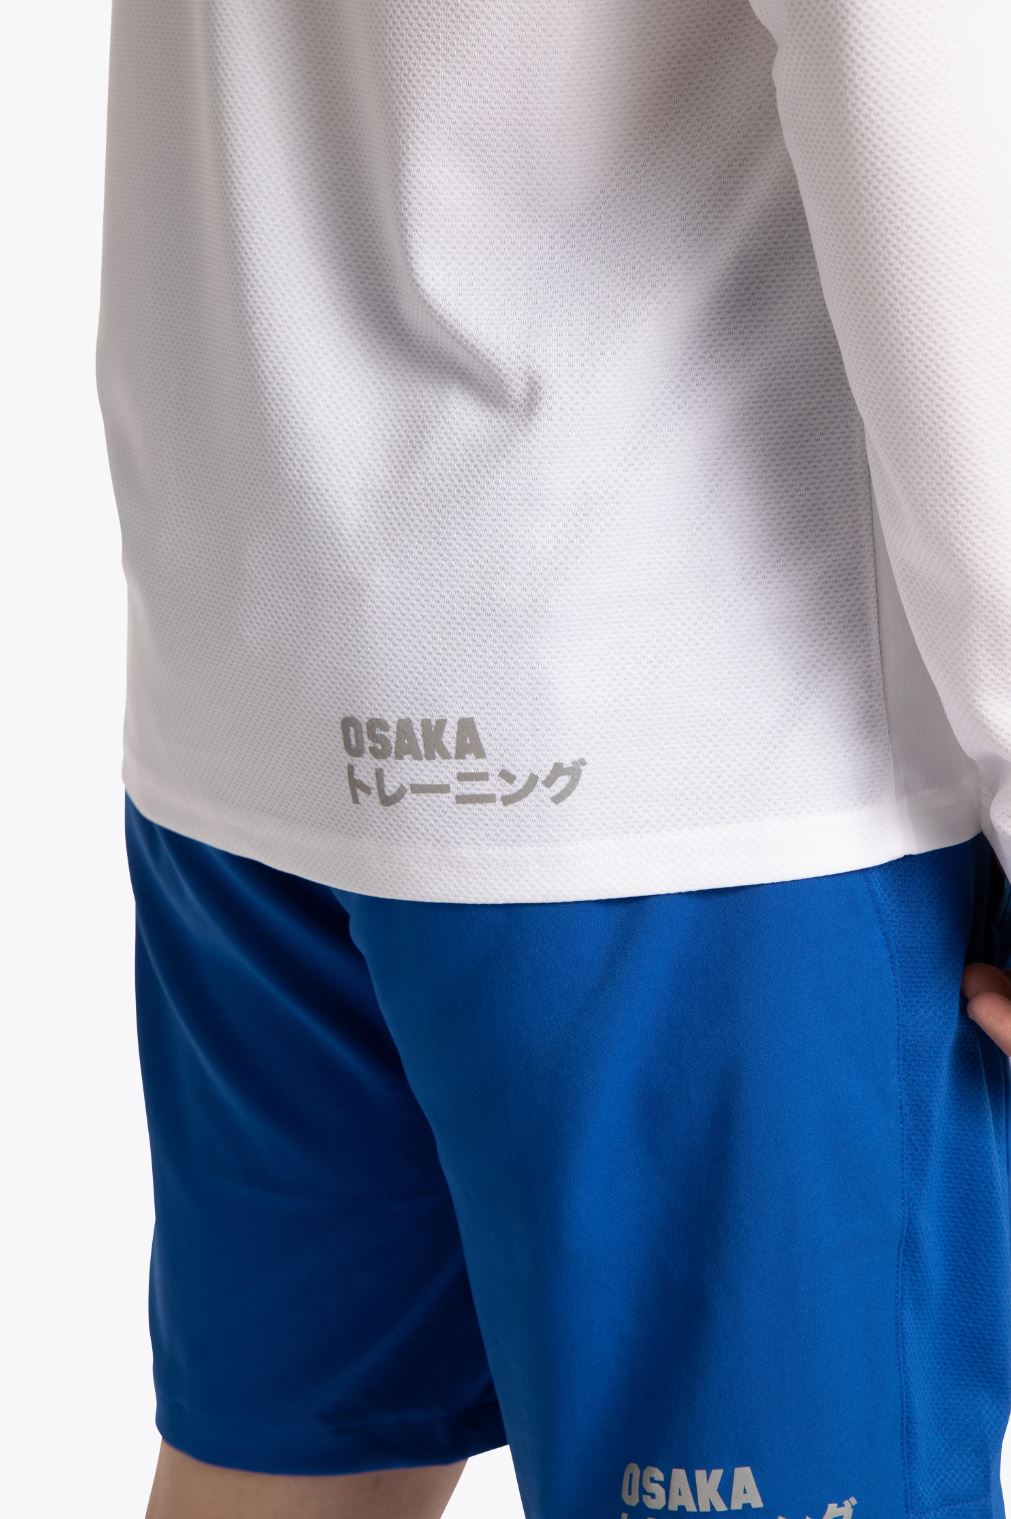 Osaka Men's Training Tee Long Sleeve (White)